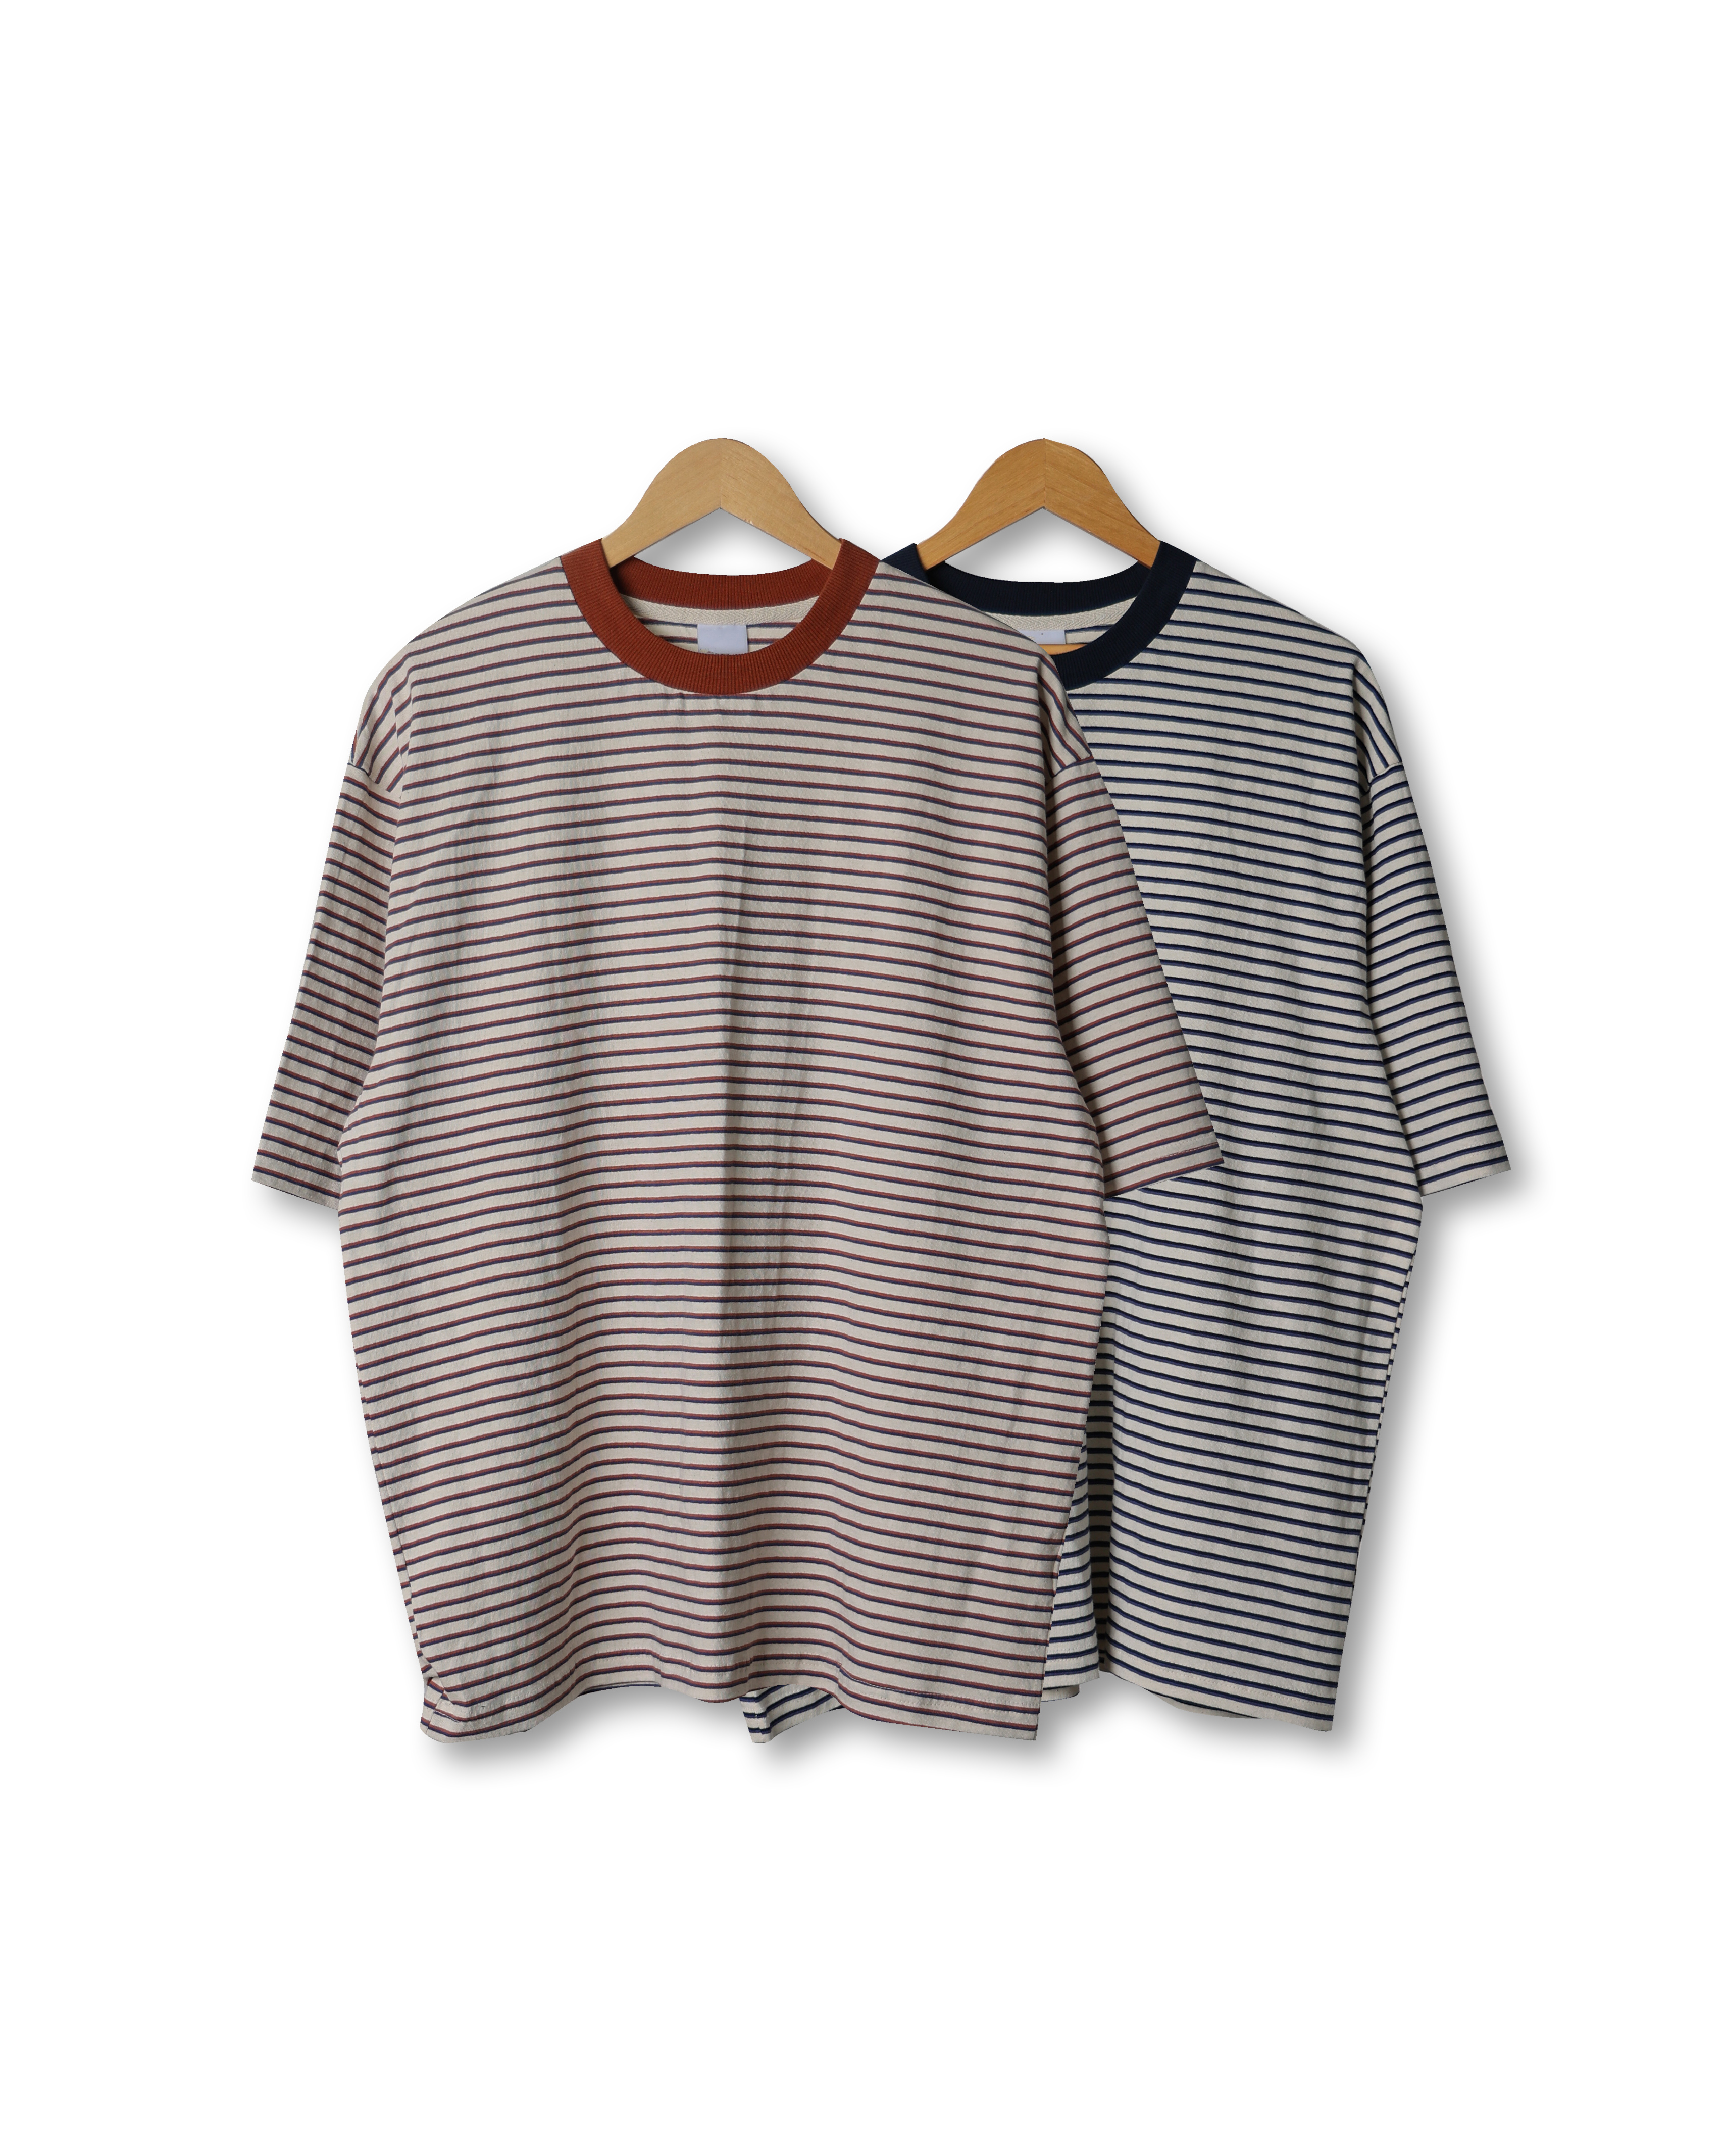 HAMML Thin Stripe Easy T Shirts (Navy/Brown)